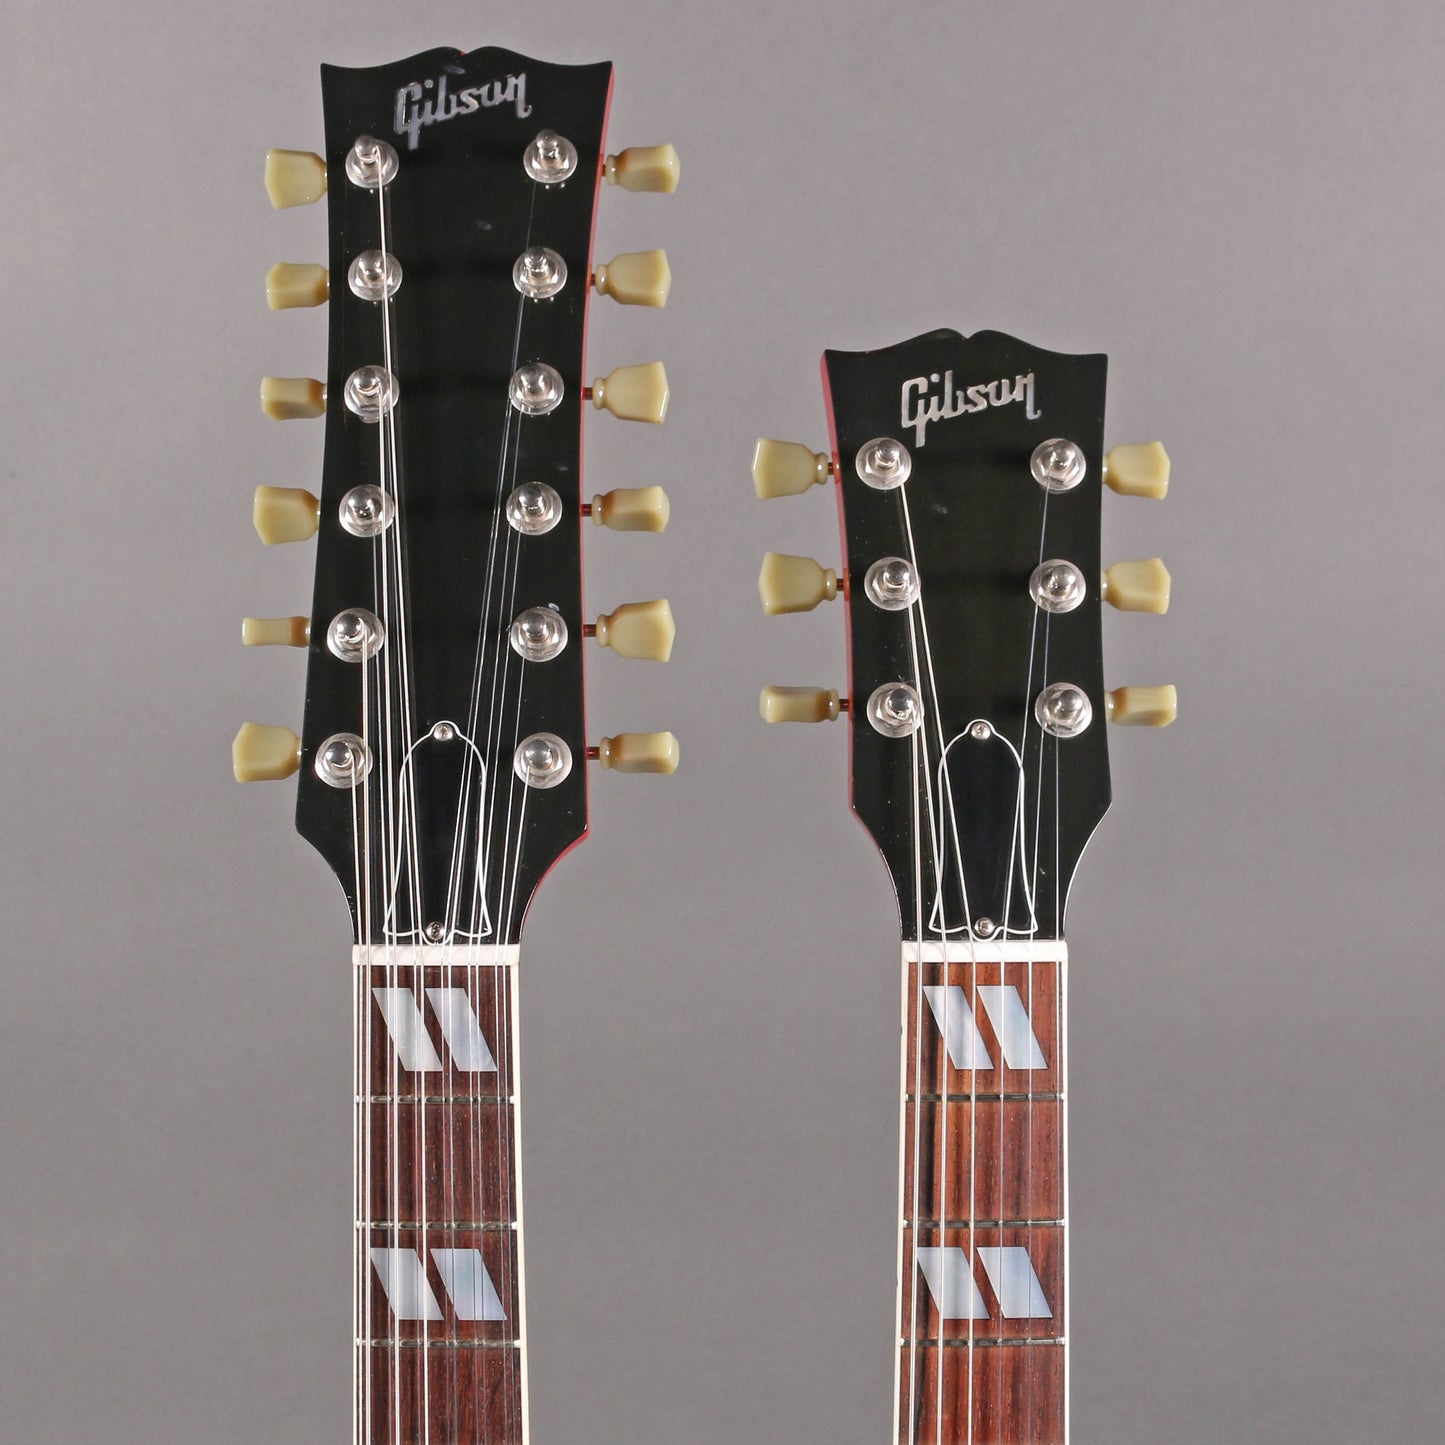 2005 Gibson EDS-1275 Double Neck